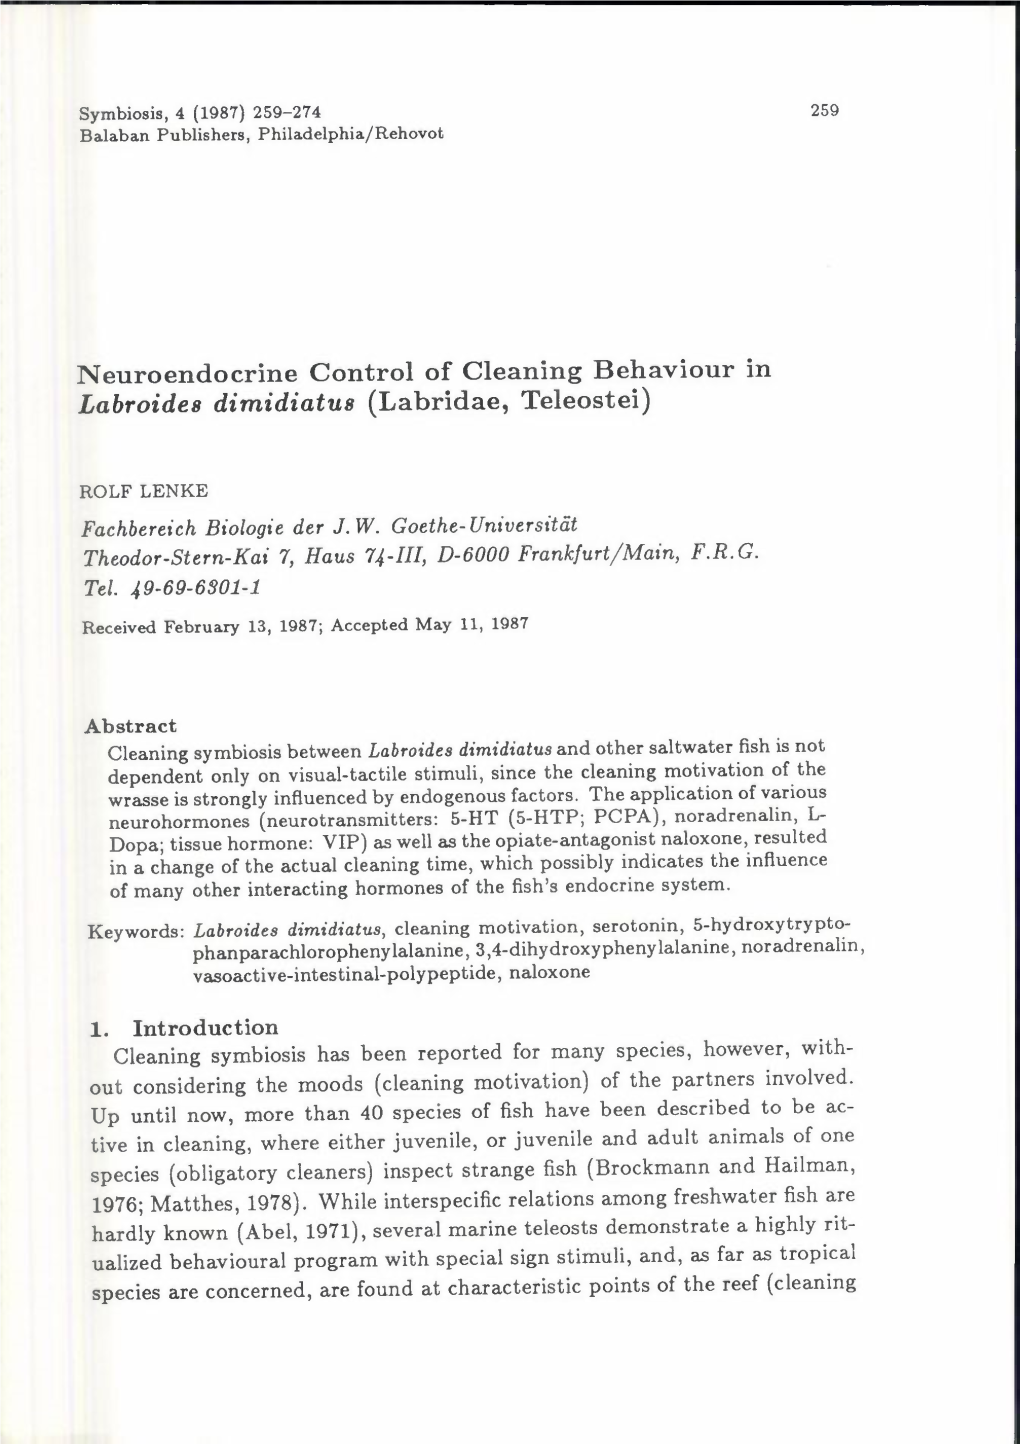 N Euroendocrine Control of Cleaning Behaviour in Labroides Dimidiatus (Labridae, Teleostei)